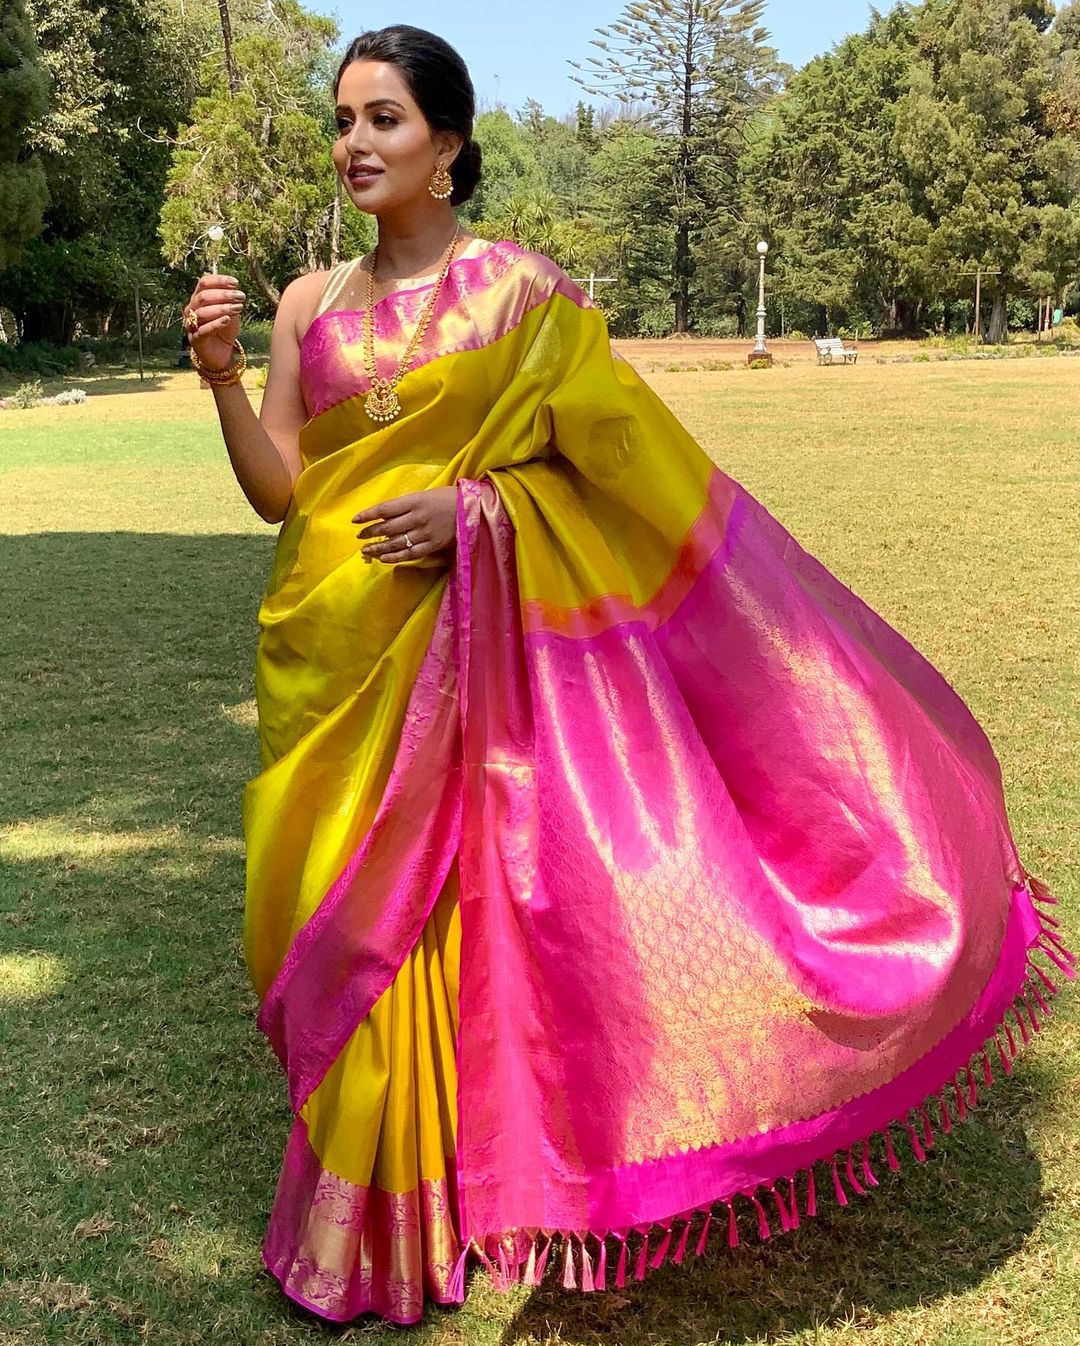 Gorgeous Raiza Wilson  In Bright Yellow & Pink Banarasi Saree With Sleek Hair Glamorous Outfits & Looks